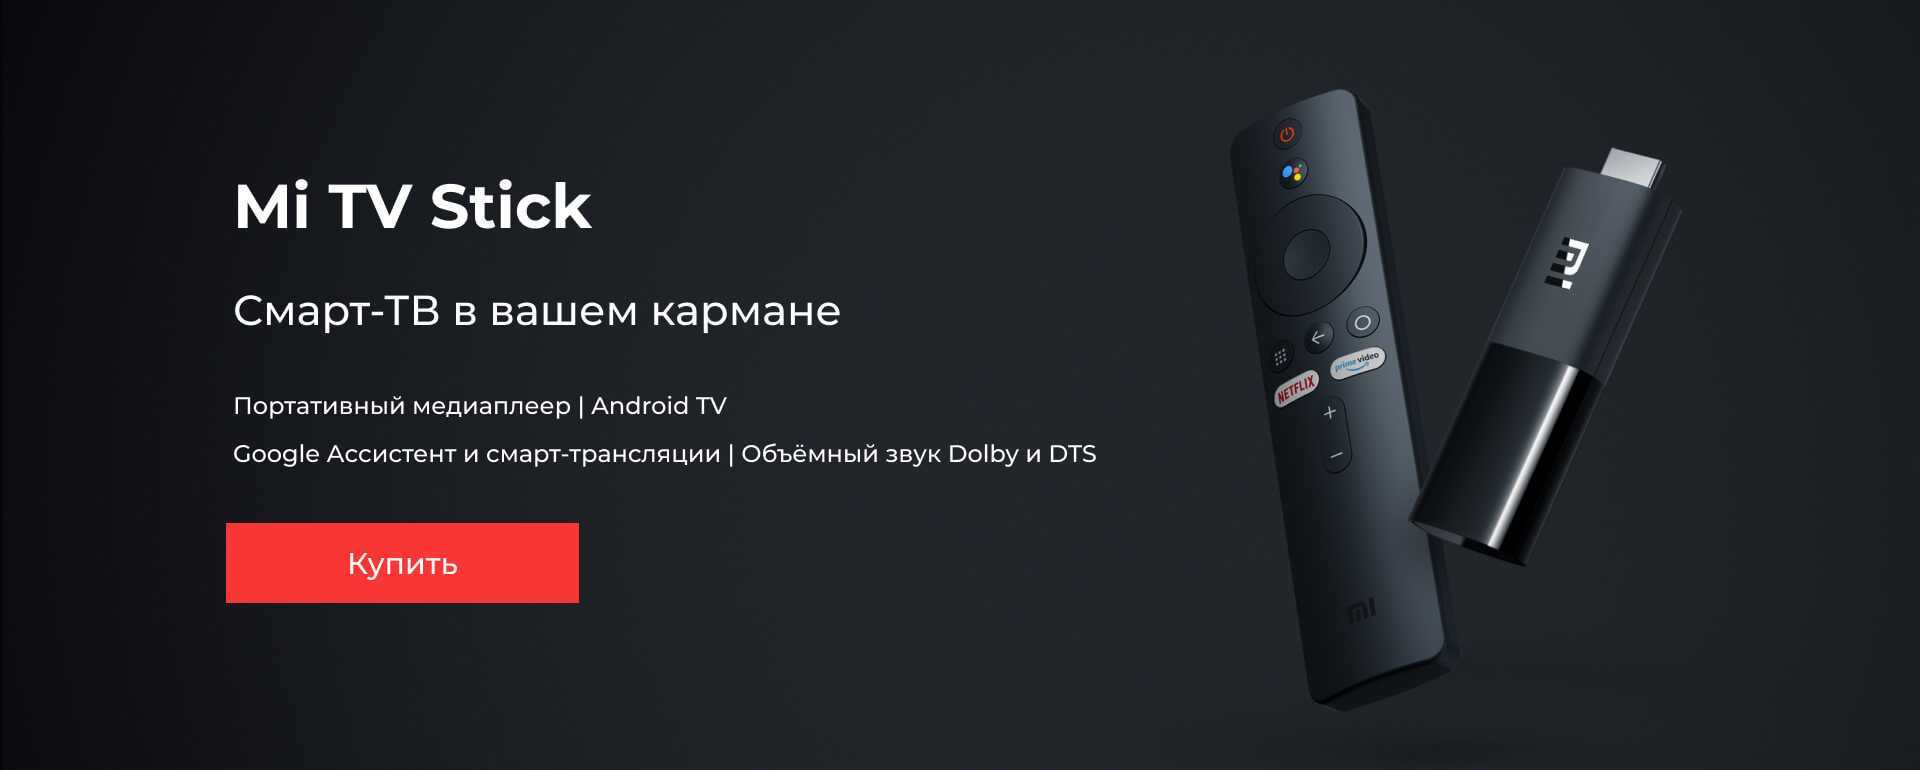 Redmi note 10 pro или galaxy a52: что выбрать? - mobilenotes.ru